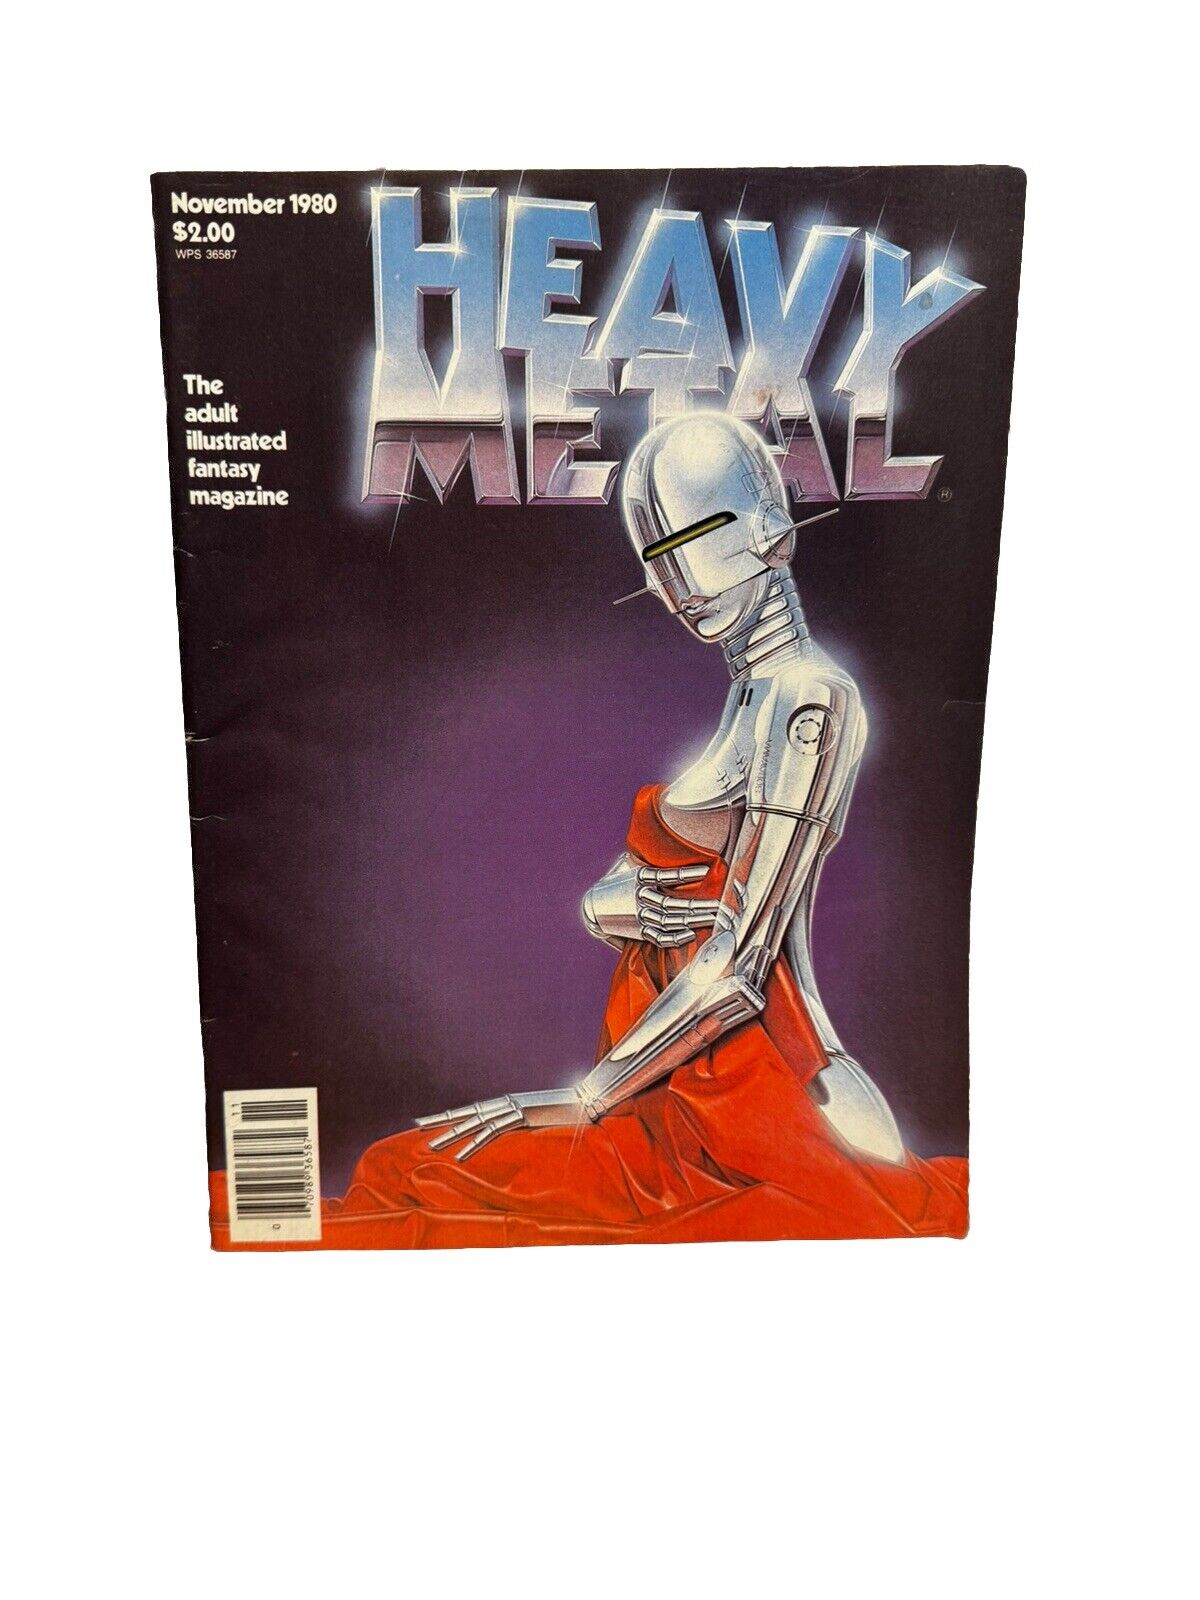 Heavy Metal Magazine V 4 #8 November 1980 Sorayama Bilal Moebius FN 1977 Series